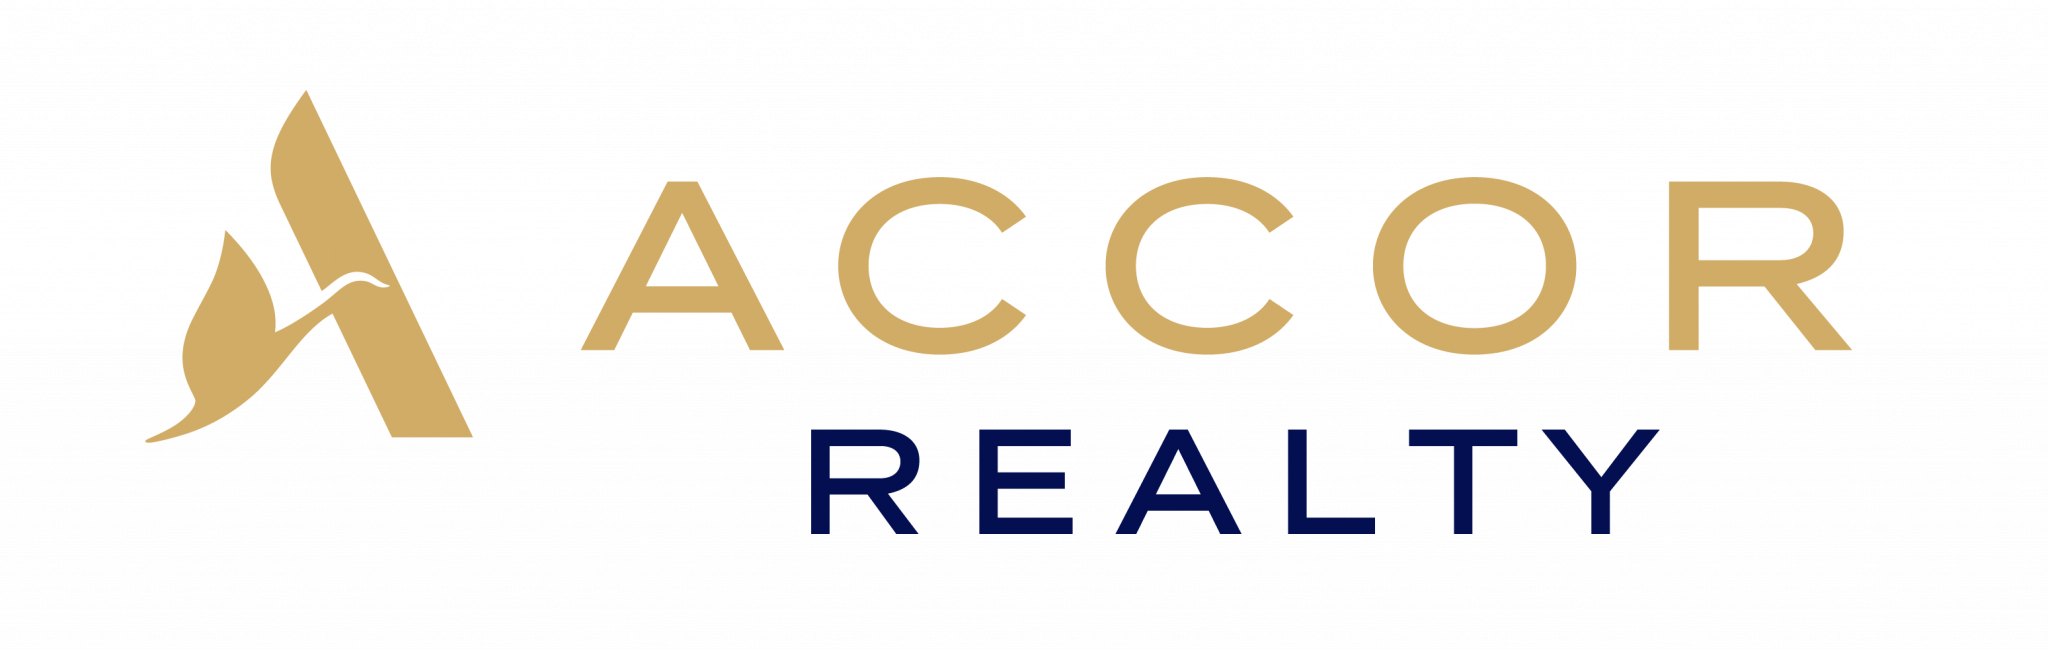 Accor Realty